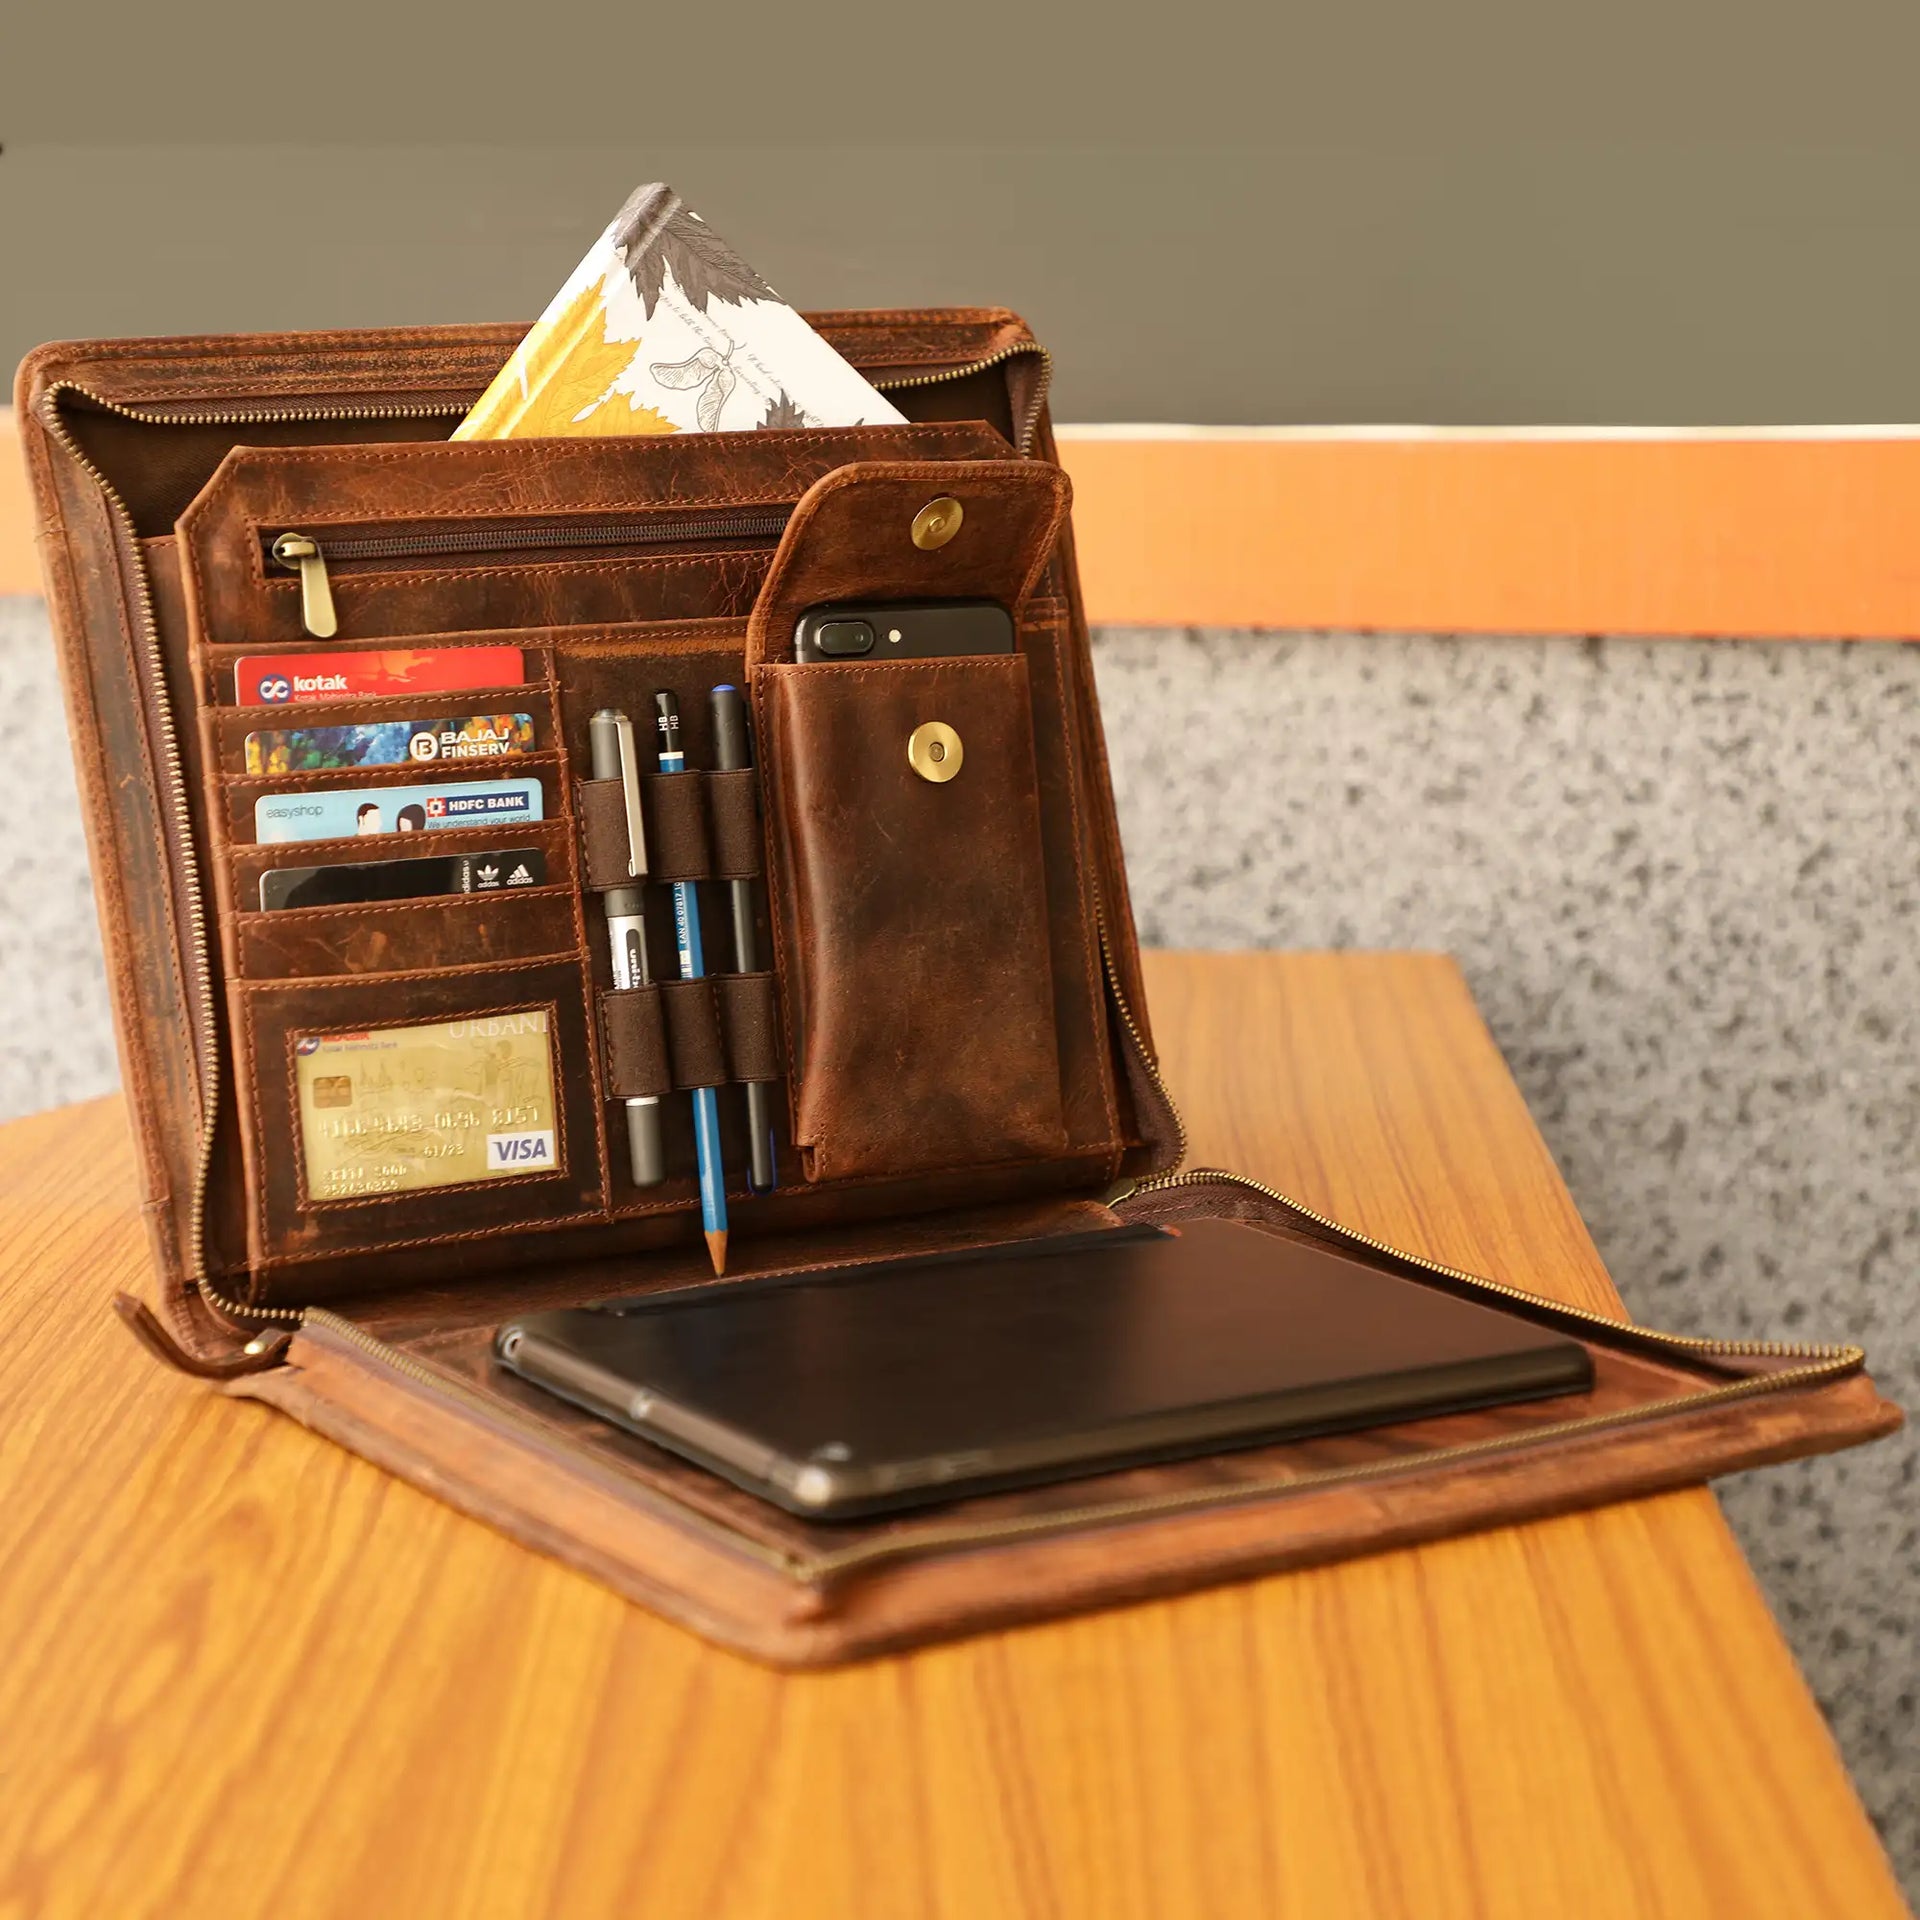 Artisian Leather Messenger Bag Cross-body Laptop Bag Satchel (14 inch) –  Rustic Town